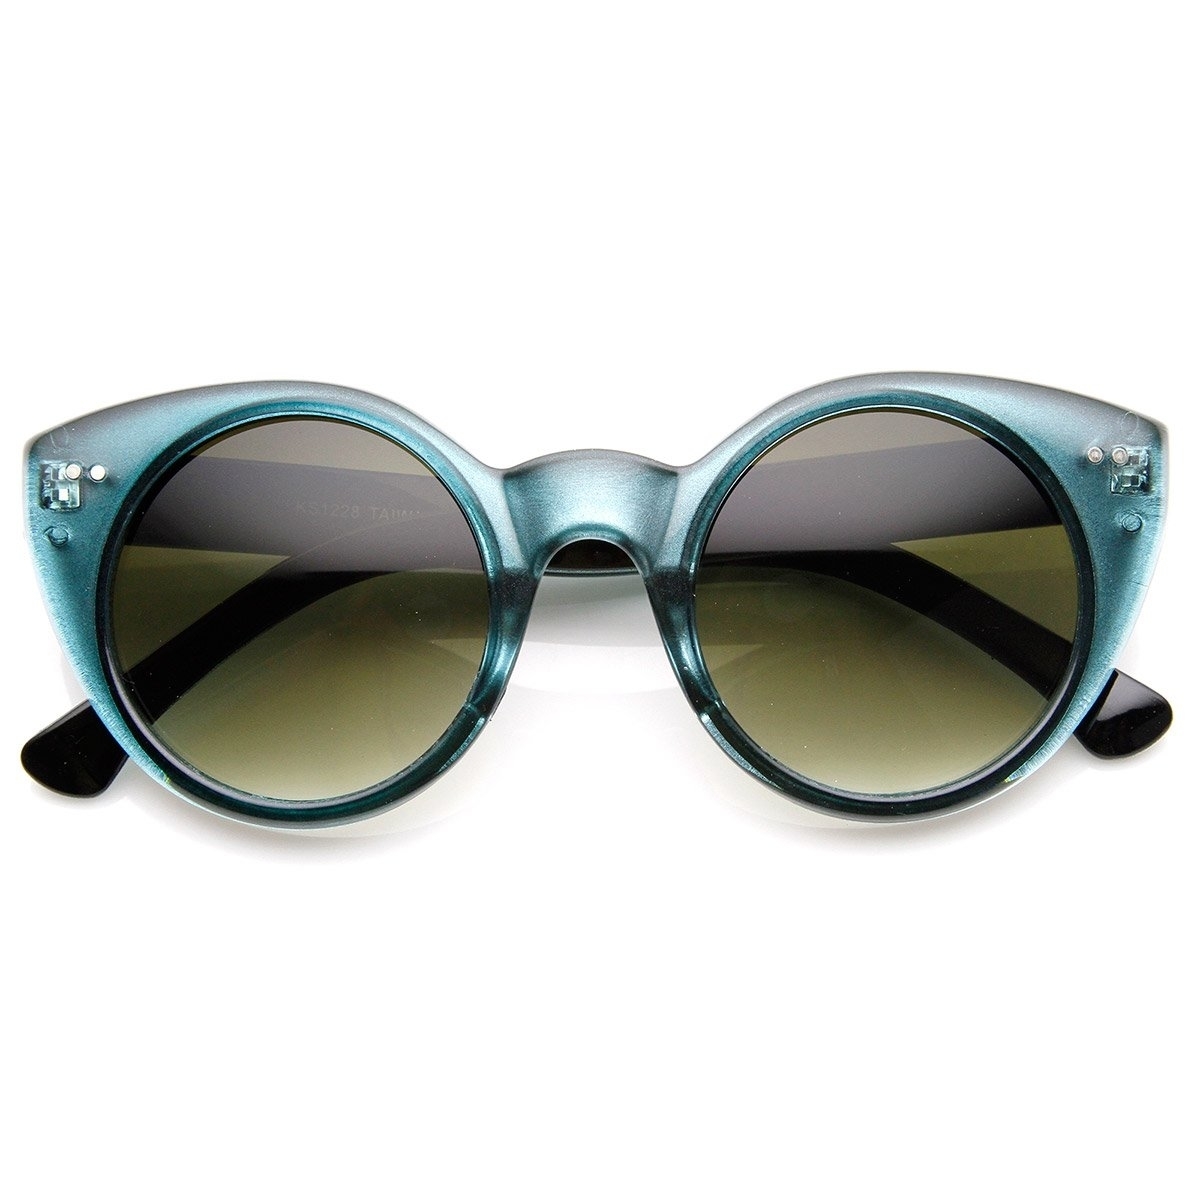 Womens Chic Round Circular Pointed Cat Eye Sunglasses - Brown